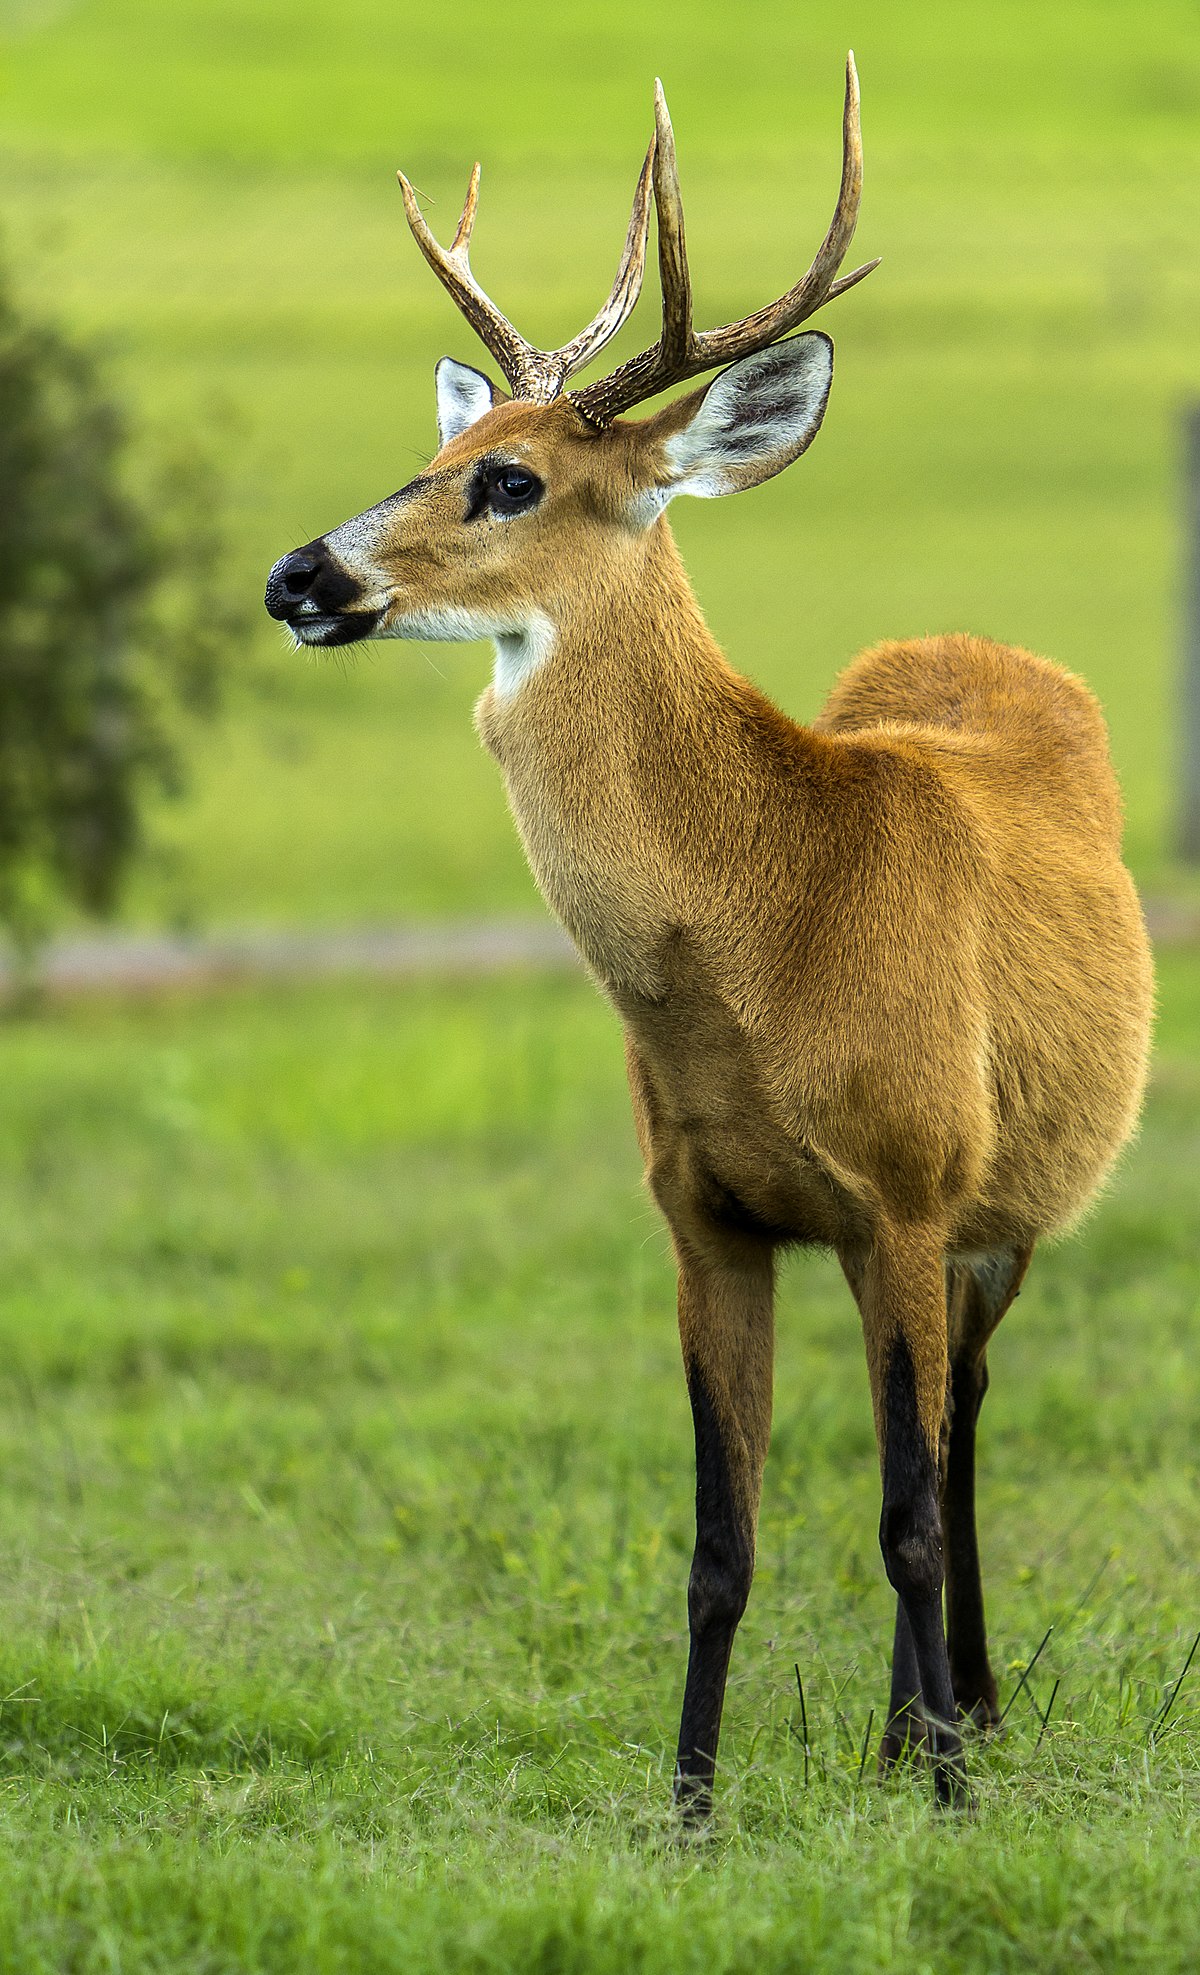 Marsh deer - Wikipedia